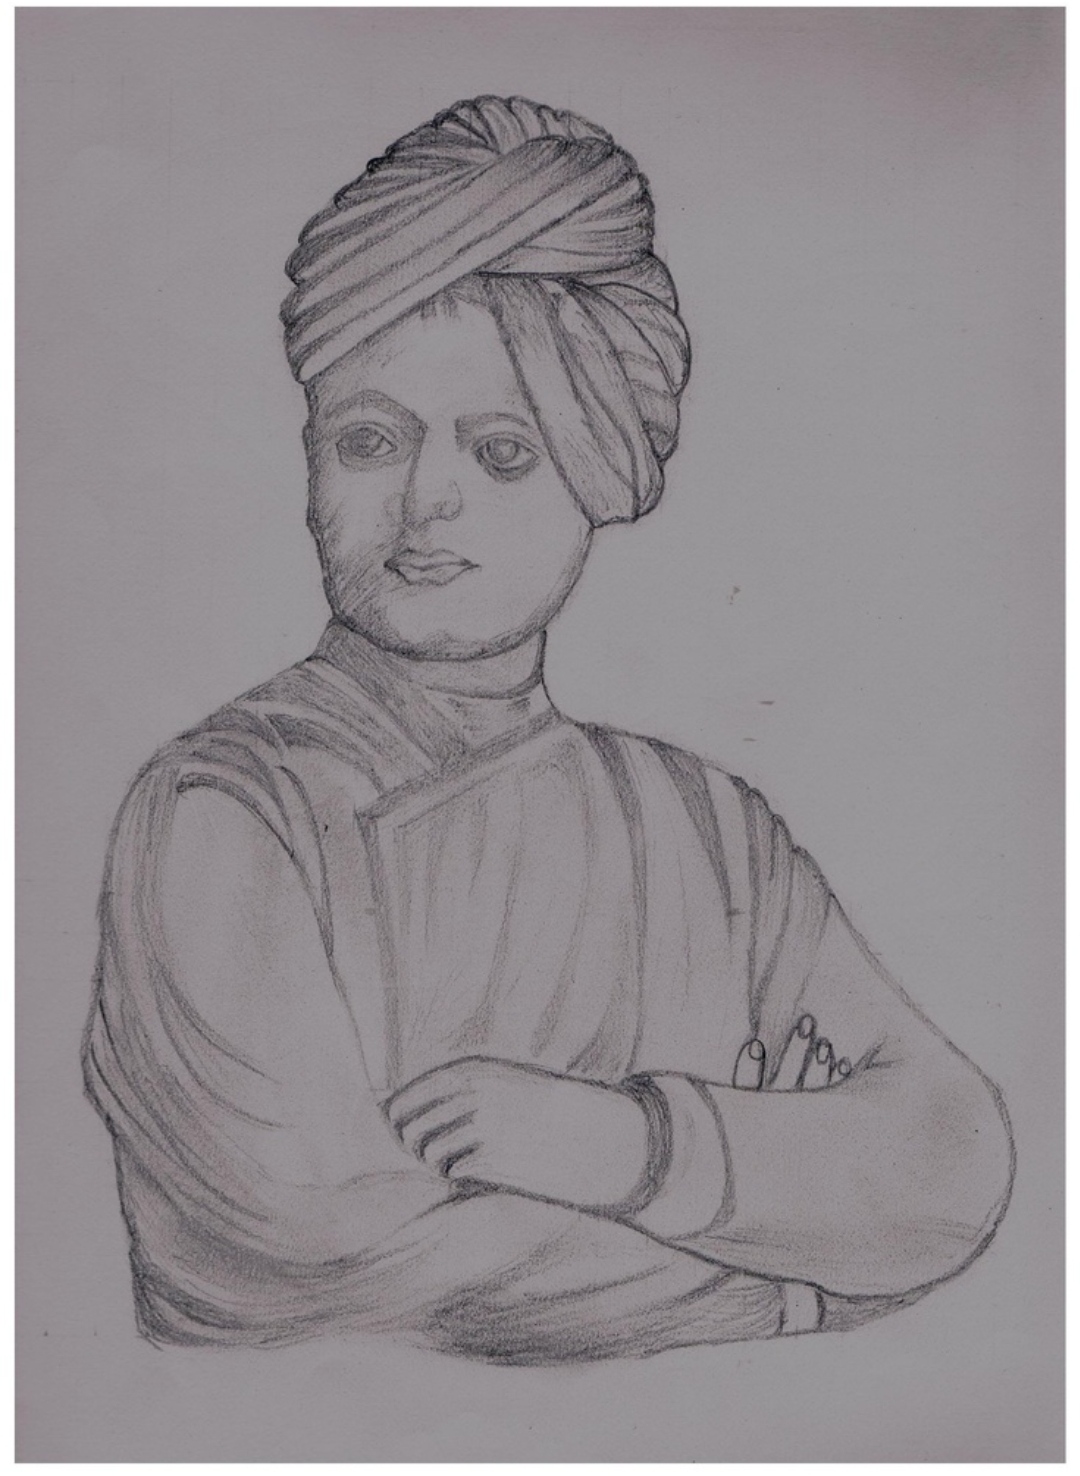 SWAMI VIVEKANANDA  artisticdipankar   Portrait Sketch  Pencil  shading on A3 Paper   swamivivekanandadrawing  Instagram